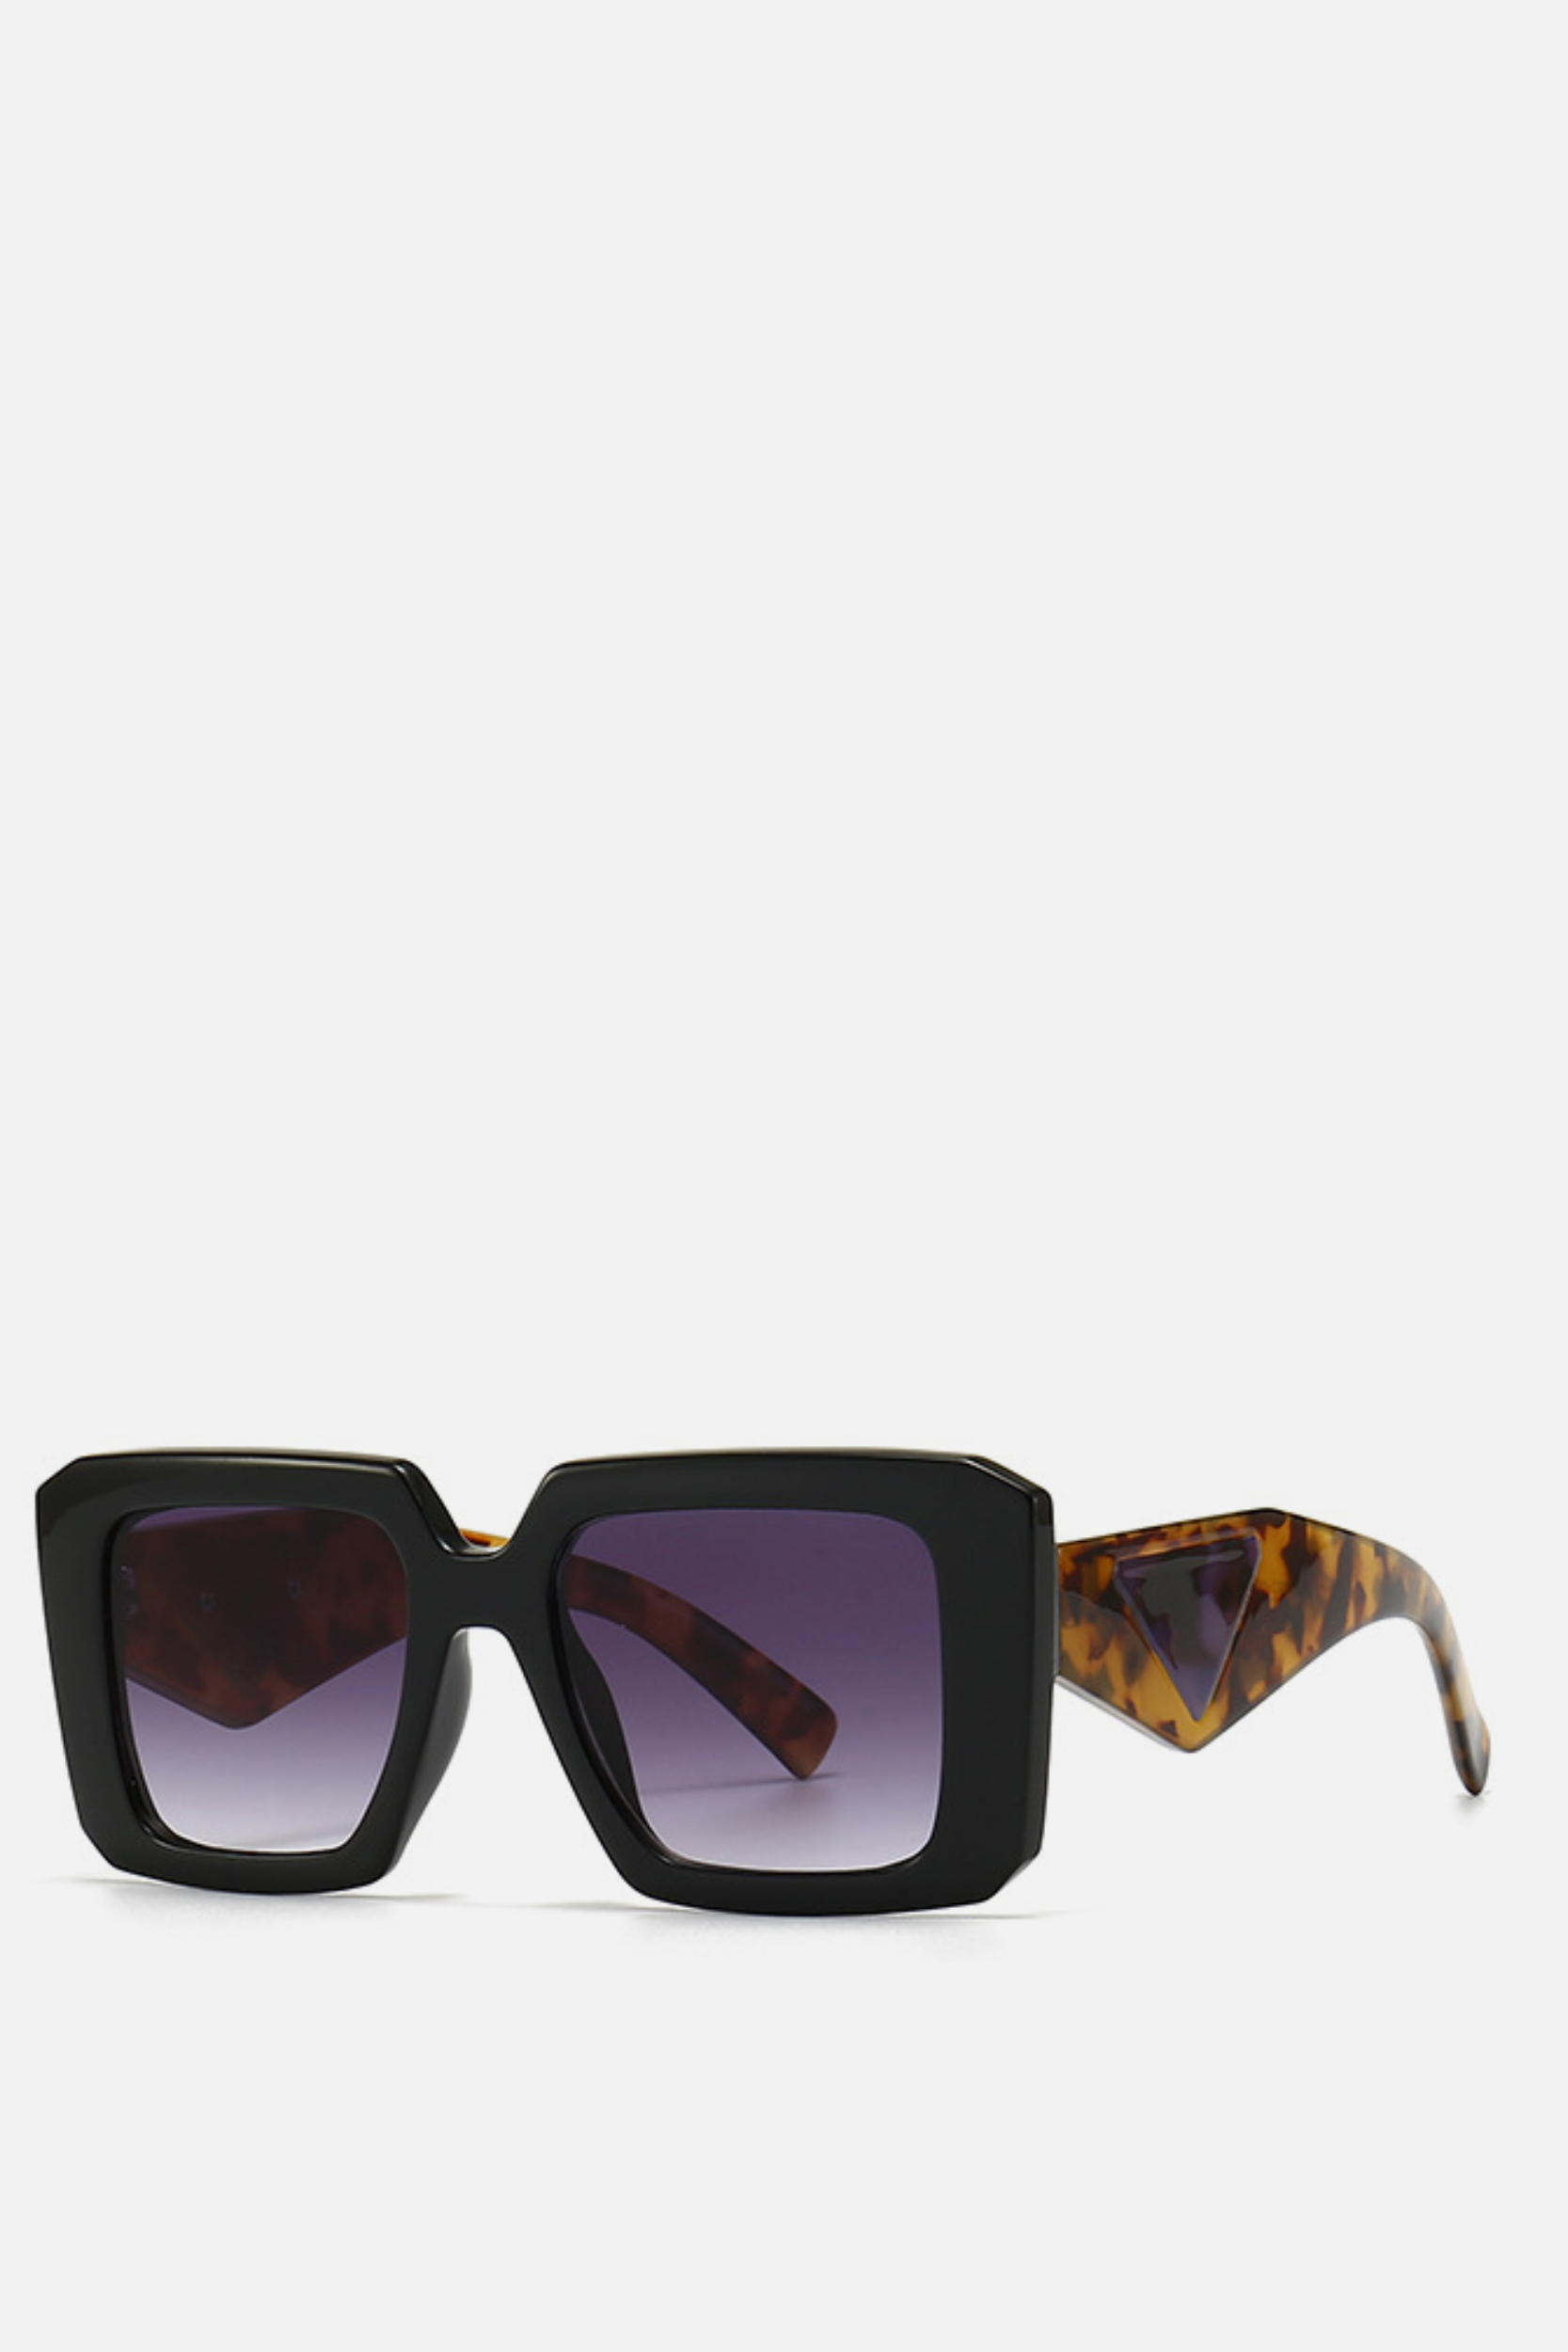 PERU Black Two Tone Square Sunglasses